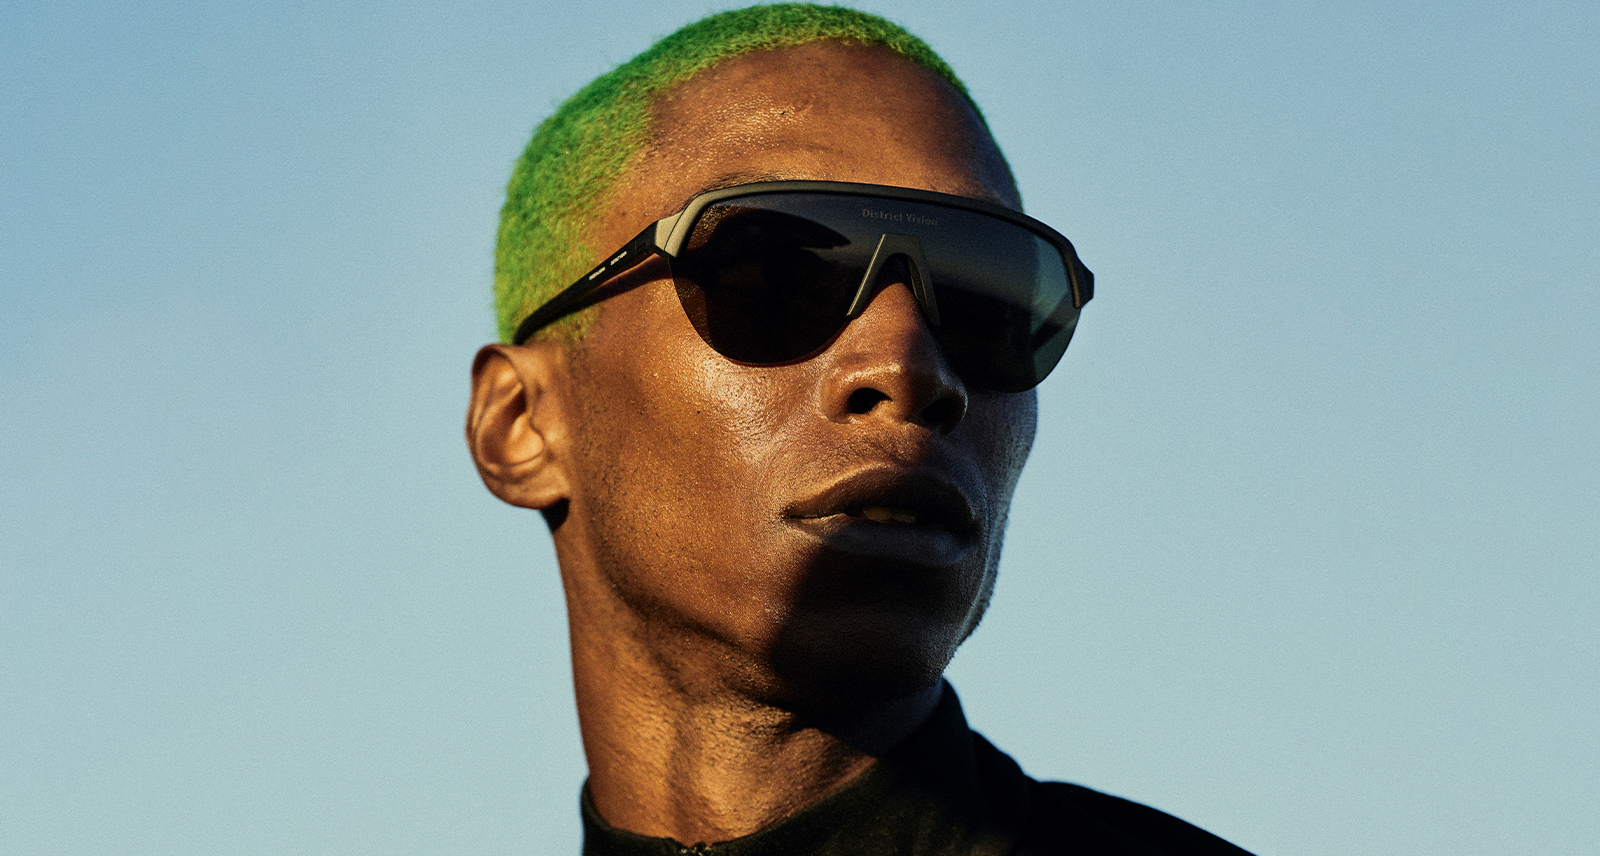 Man with green buzzcut wearing dark black sunglasses